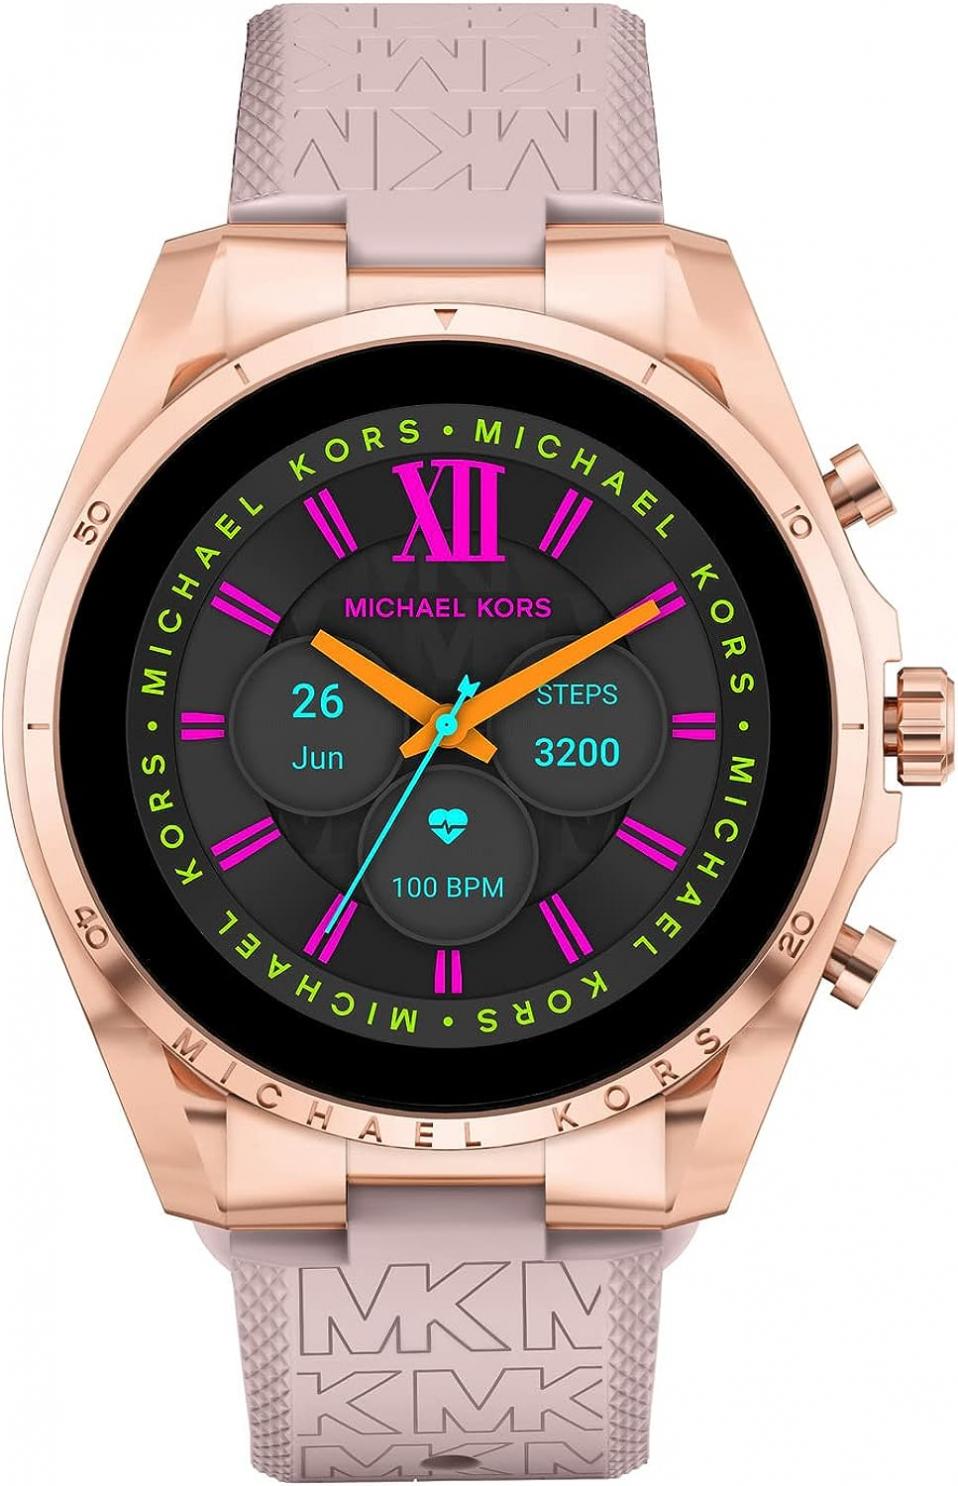 Michael Kors Men's & Women's Gen 6 44mm Touchscreen Smart Watch with Alexa Built-In, Fitness Tracker, Sleep Tracker, Heart Rate Monitor, GPS, Music Control, Smartphone Notifications (Model: MKT5150V)